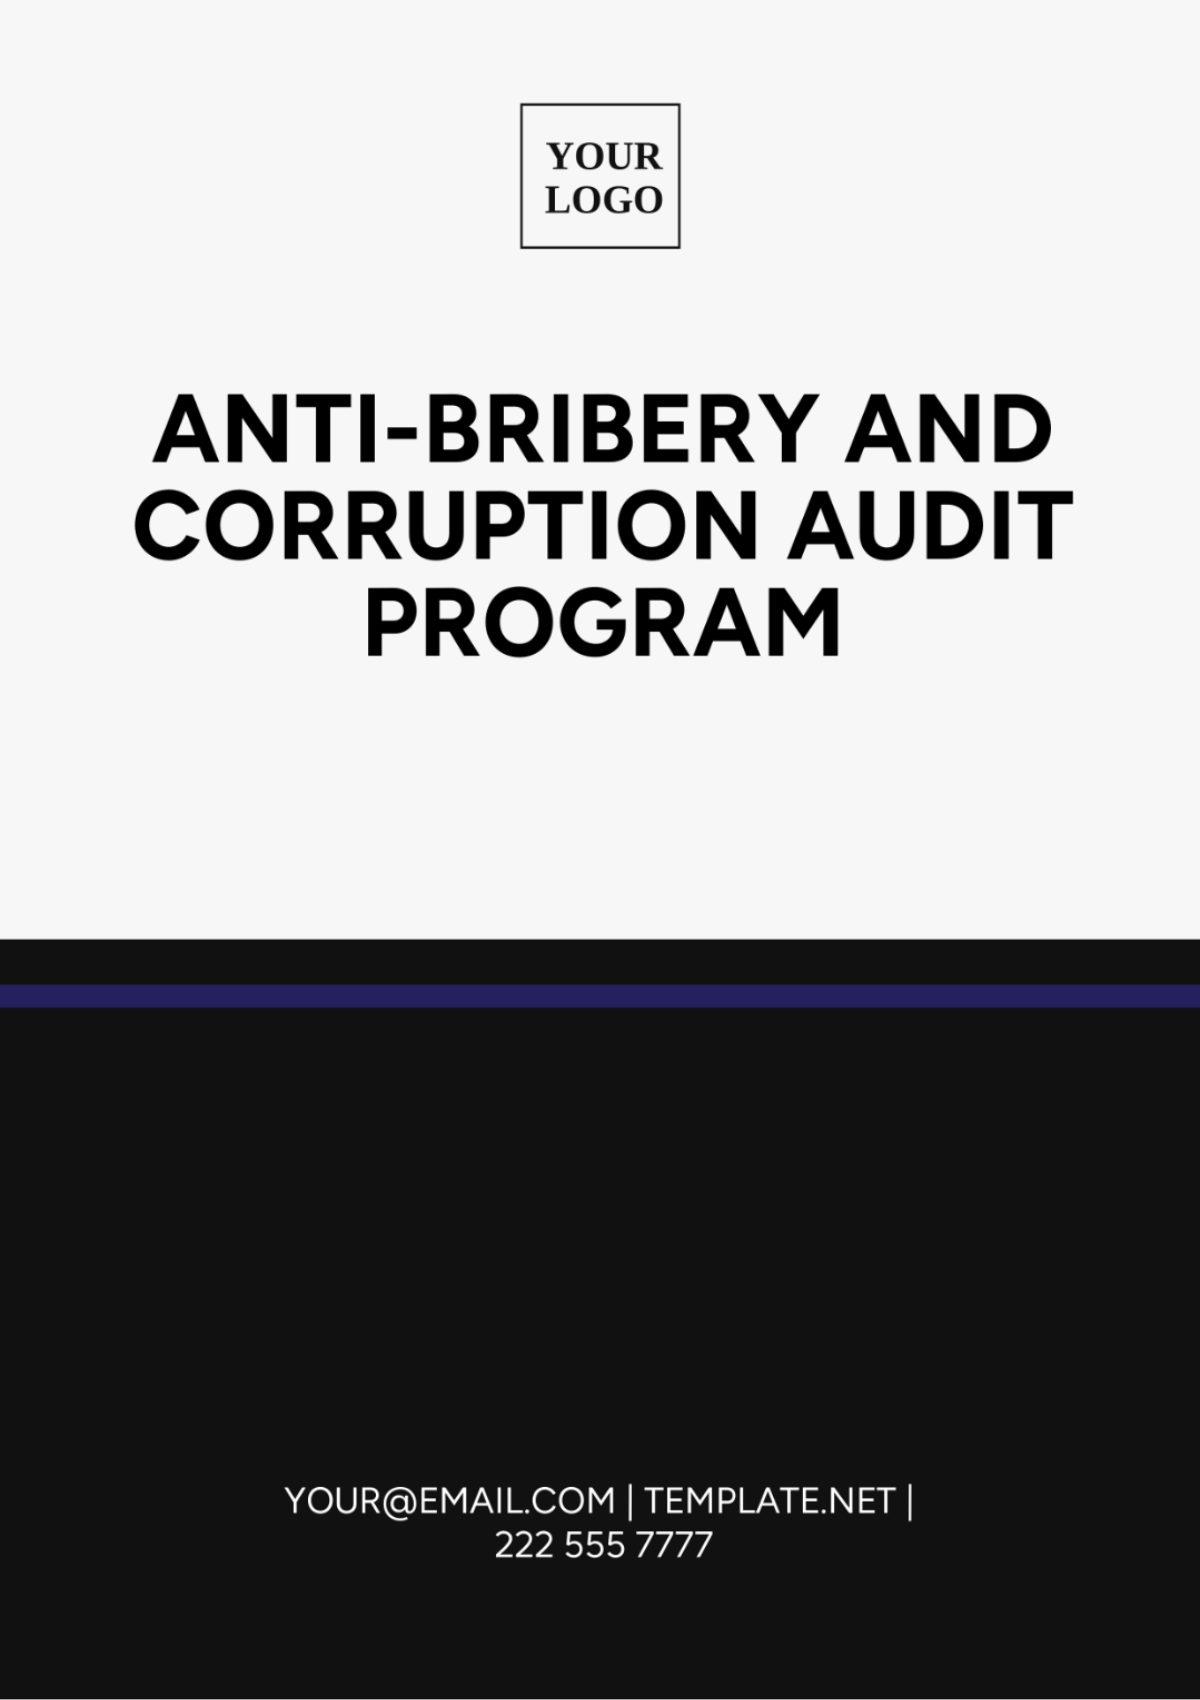 Free Anti-Bribery and Corruption Audit Program Template